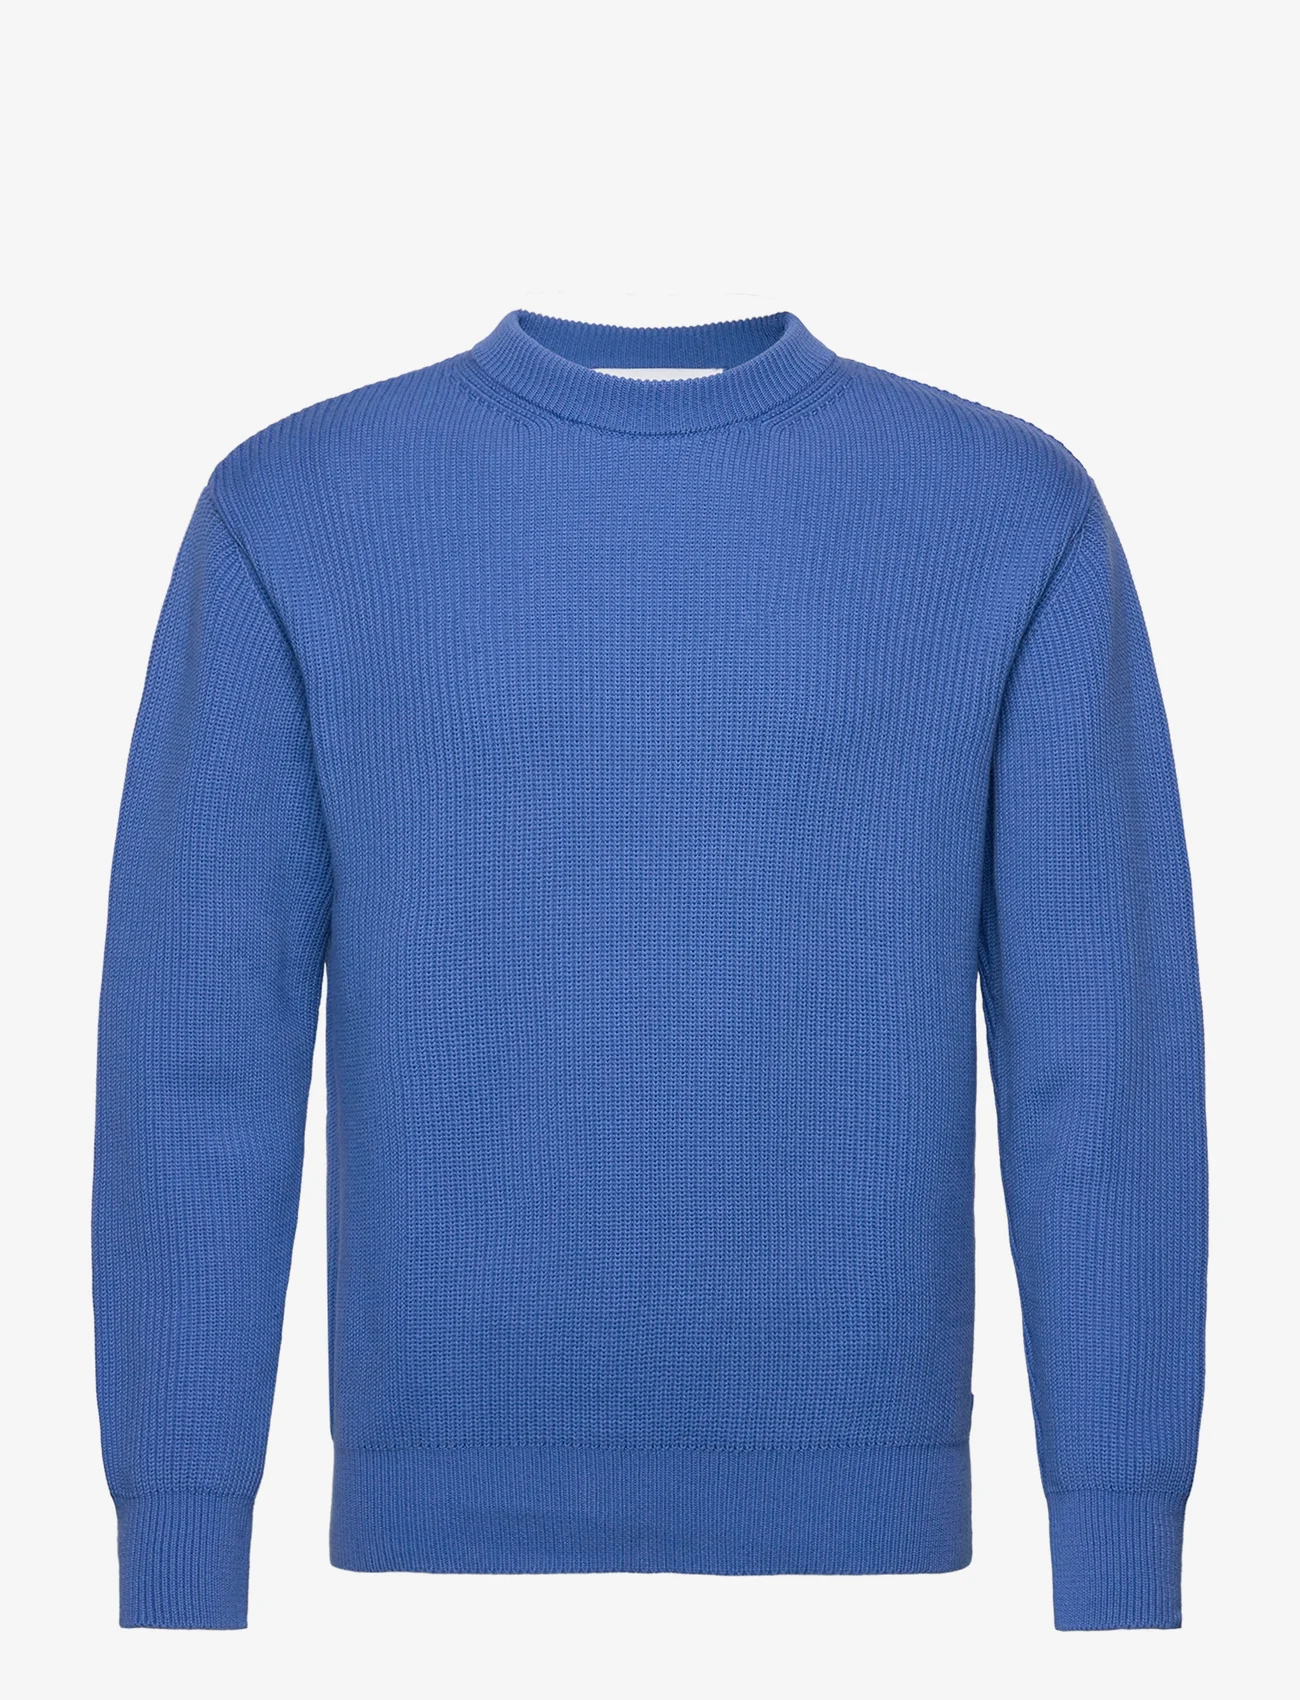 Garment Project - Round Neck Knit - Blue - pohjoismainen tyyli - blue - 0